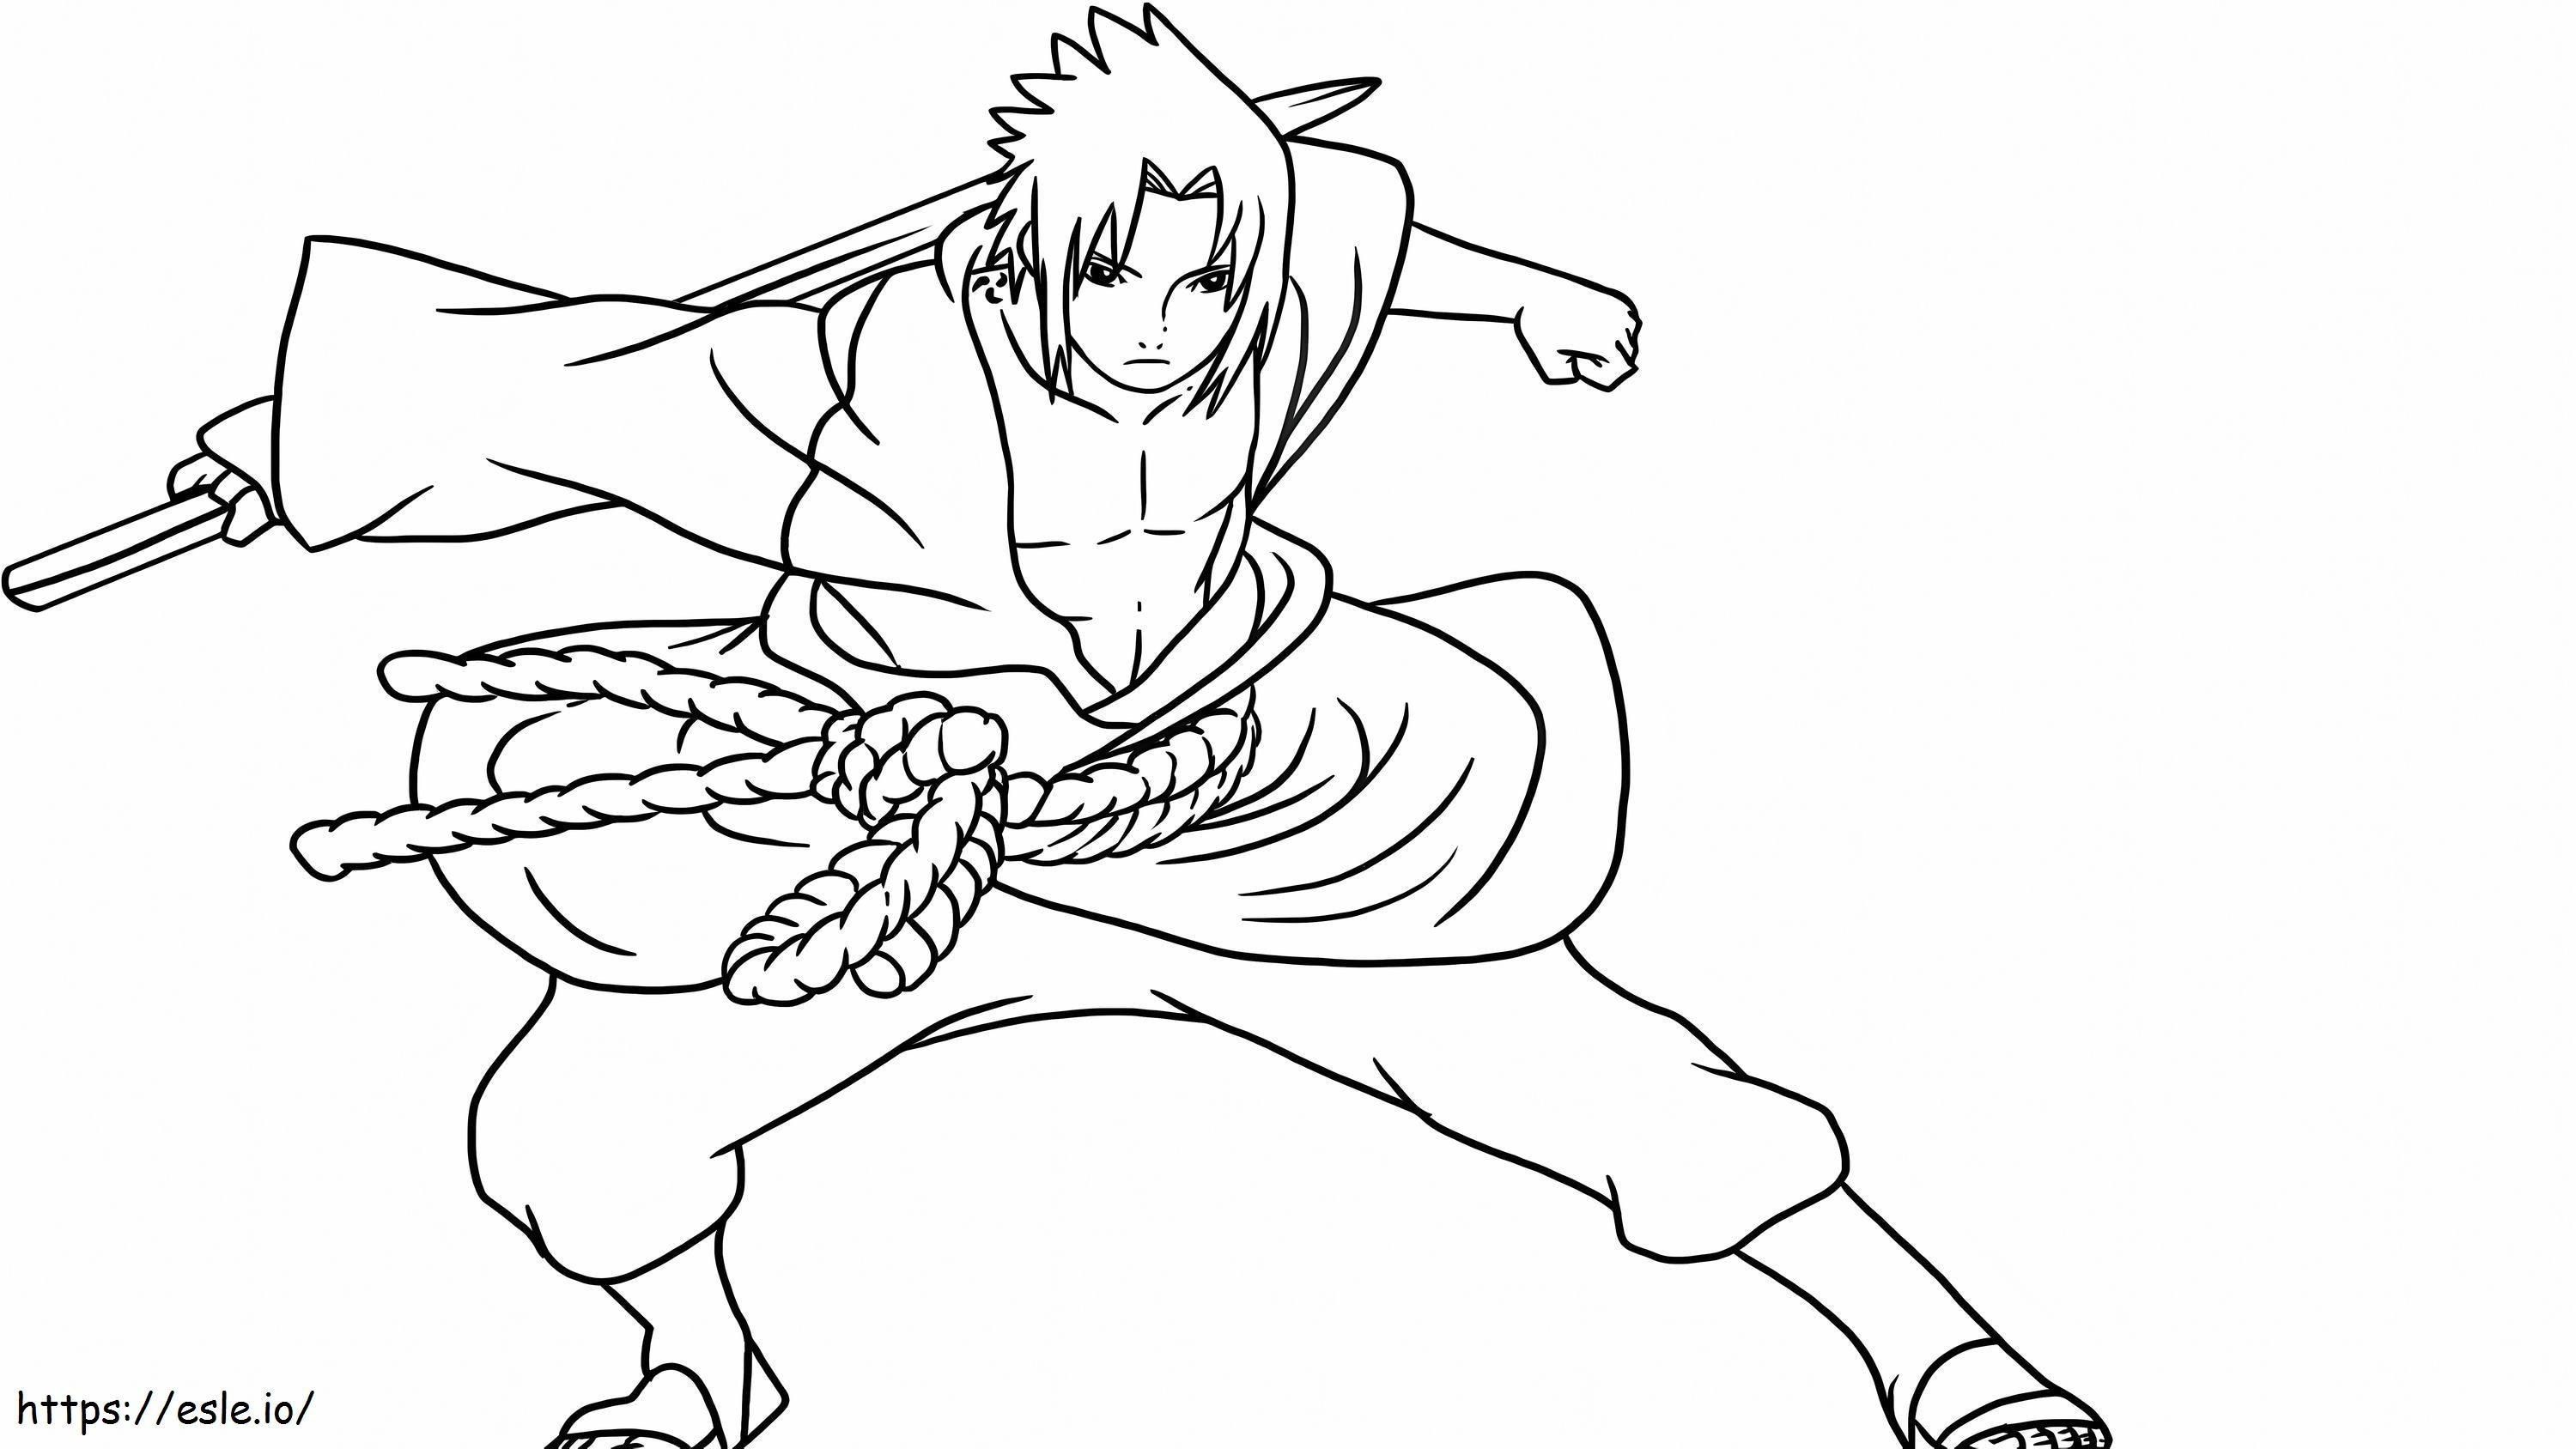 Genial Sasuke coloring page